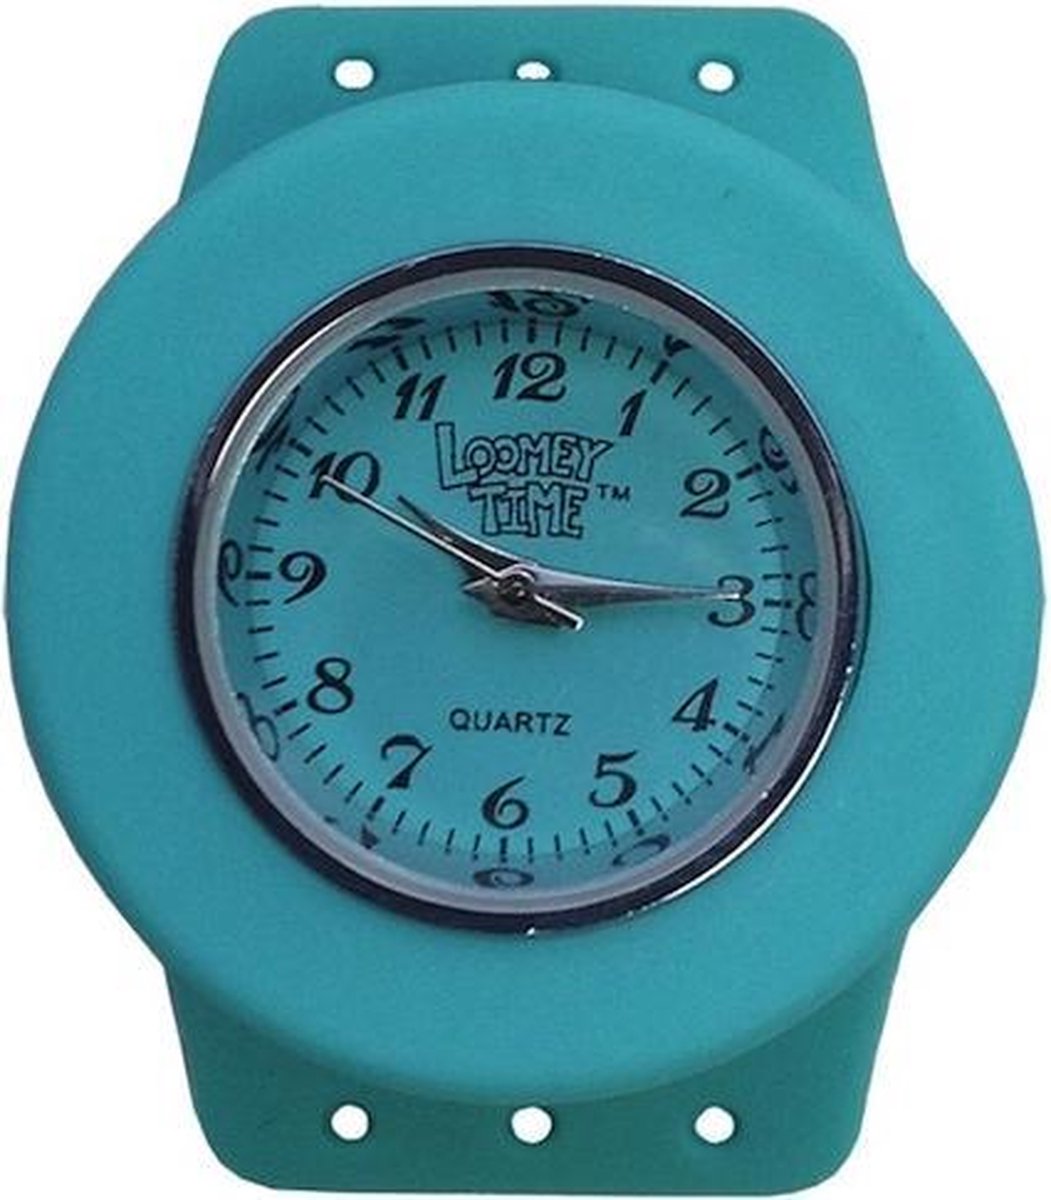 Loom Loomey Time horloge blauw40